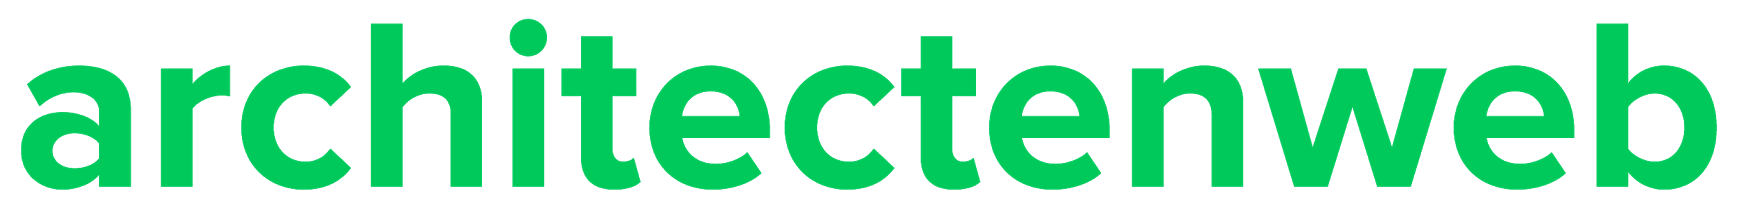 Architectenweb logo